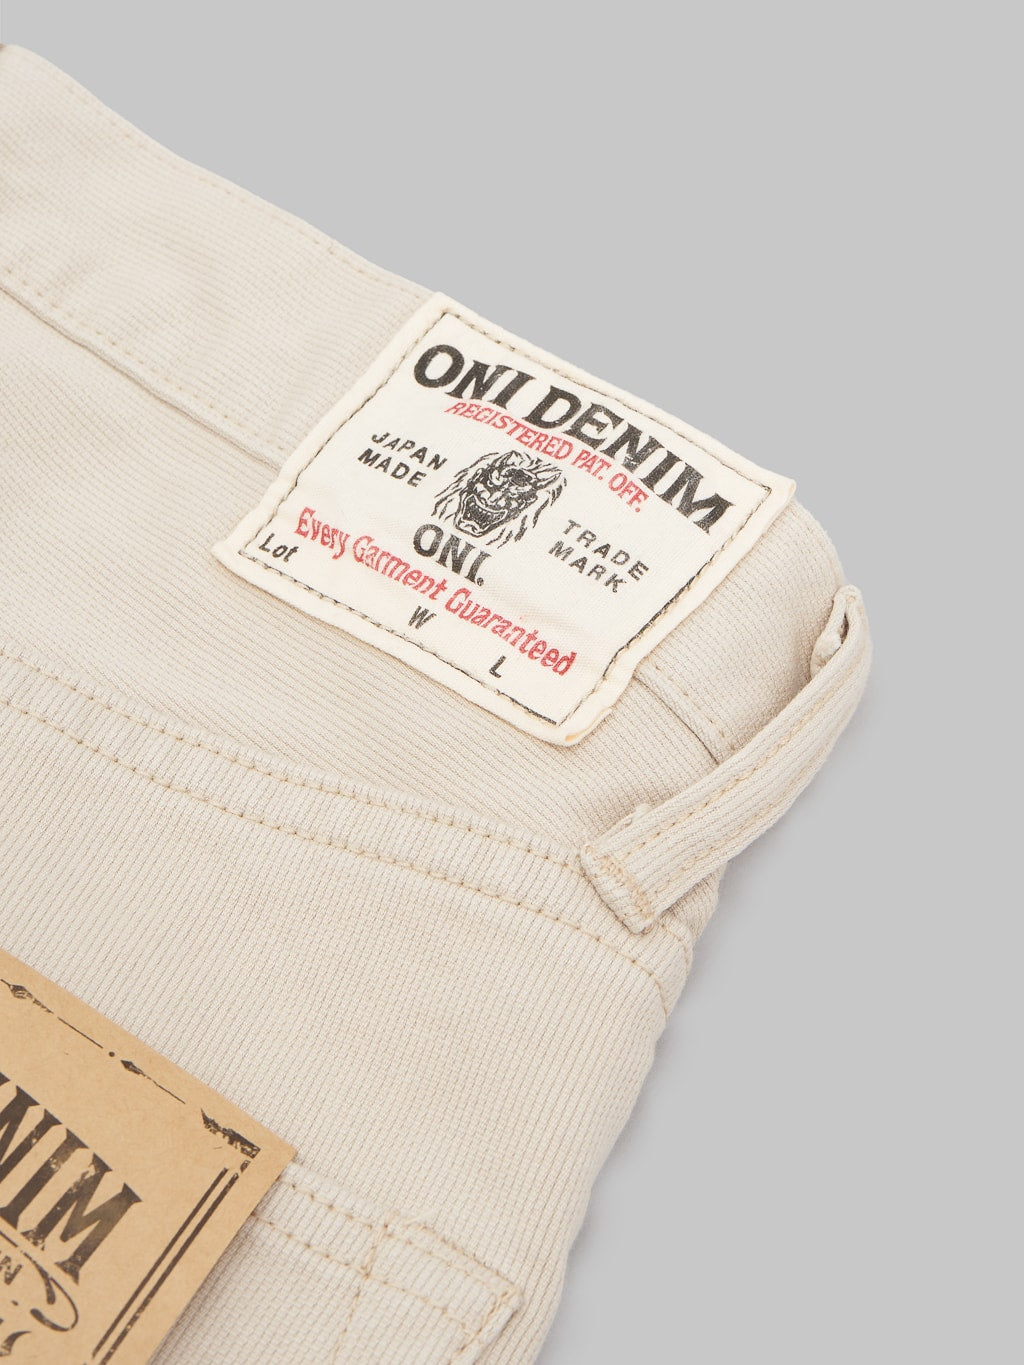 oni denim 216 california pique sand beige neat straight jeans cotton patch